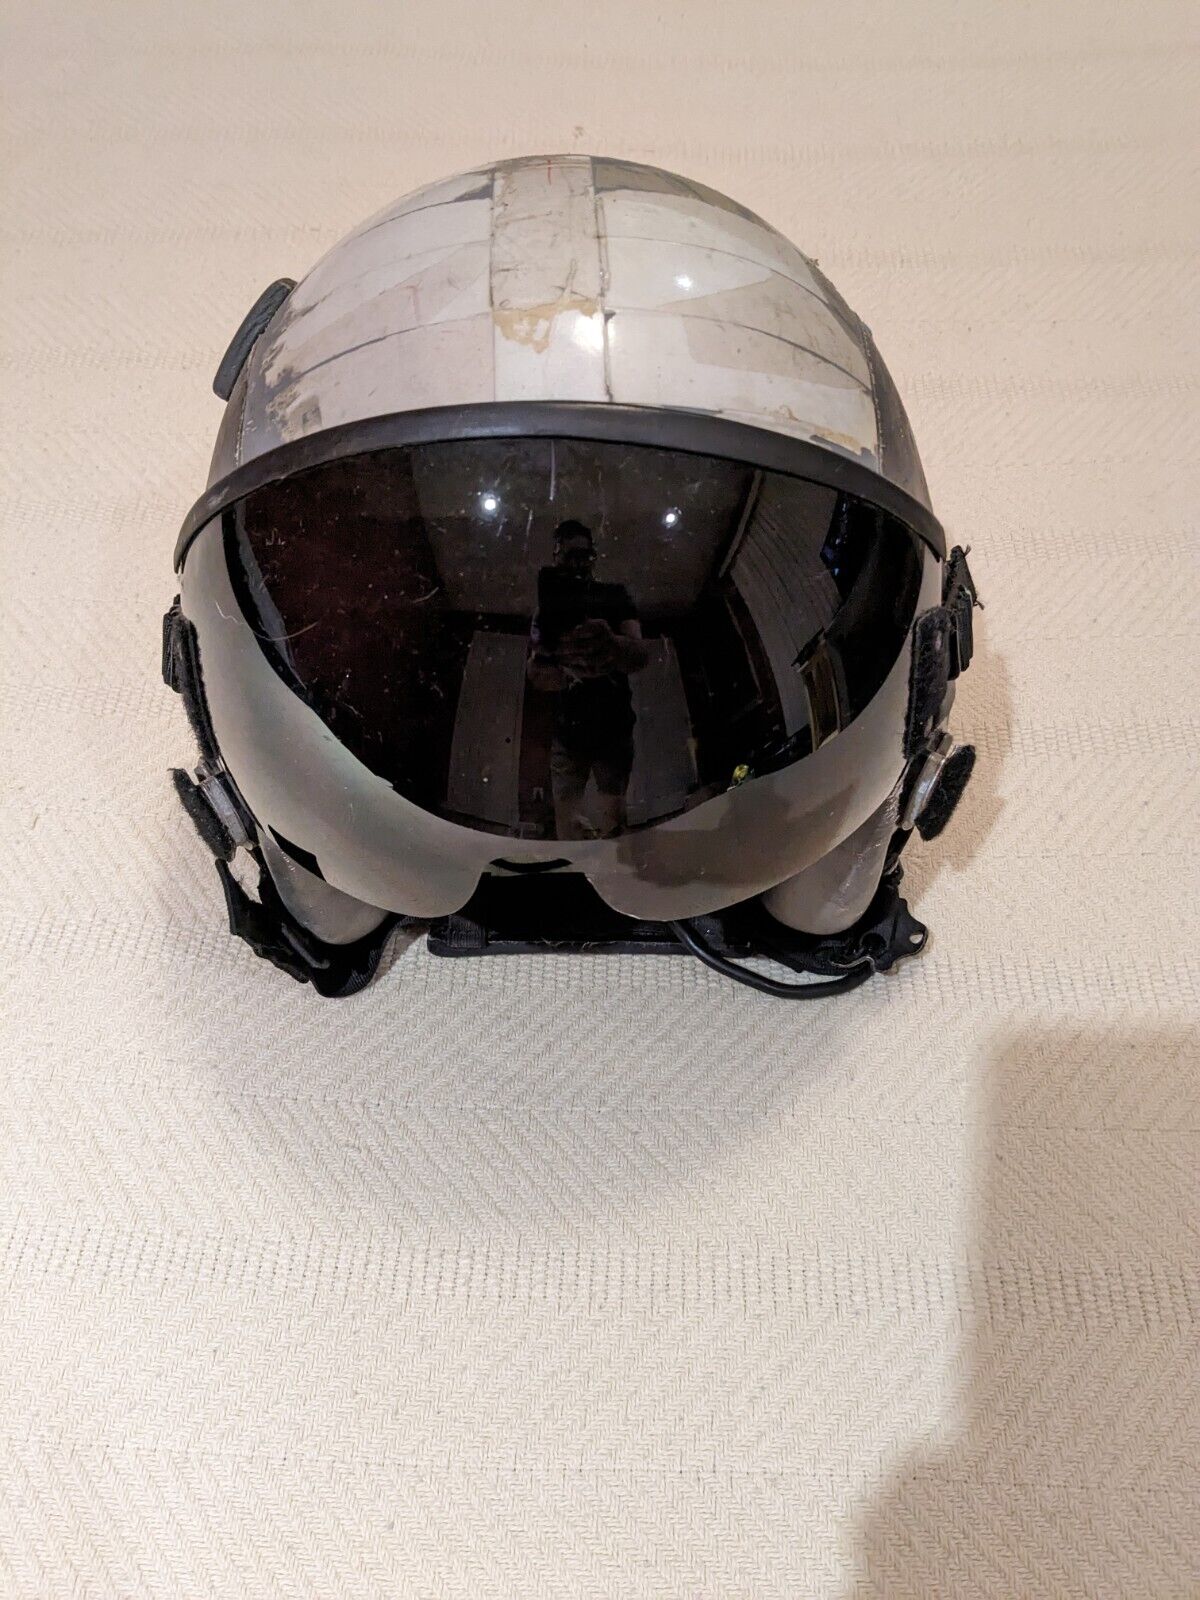 F/A-18 pilot helmet